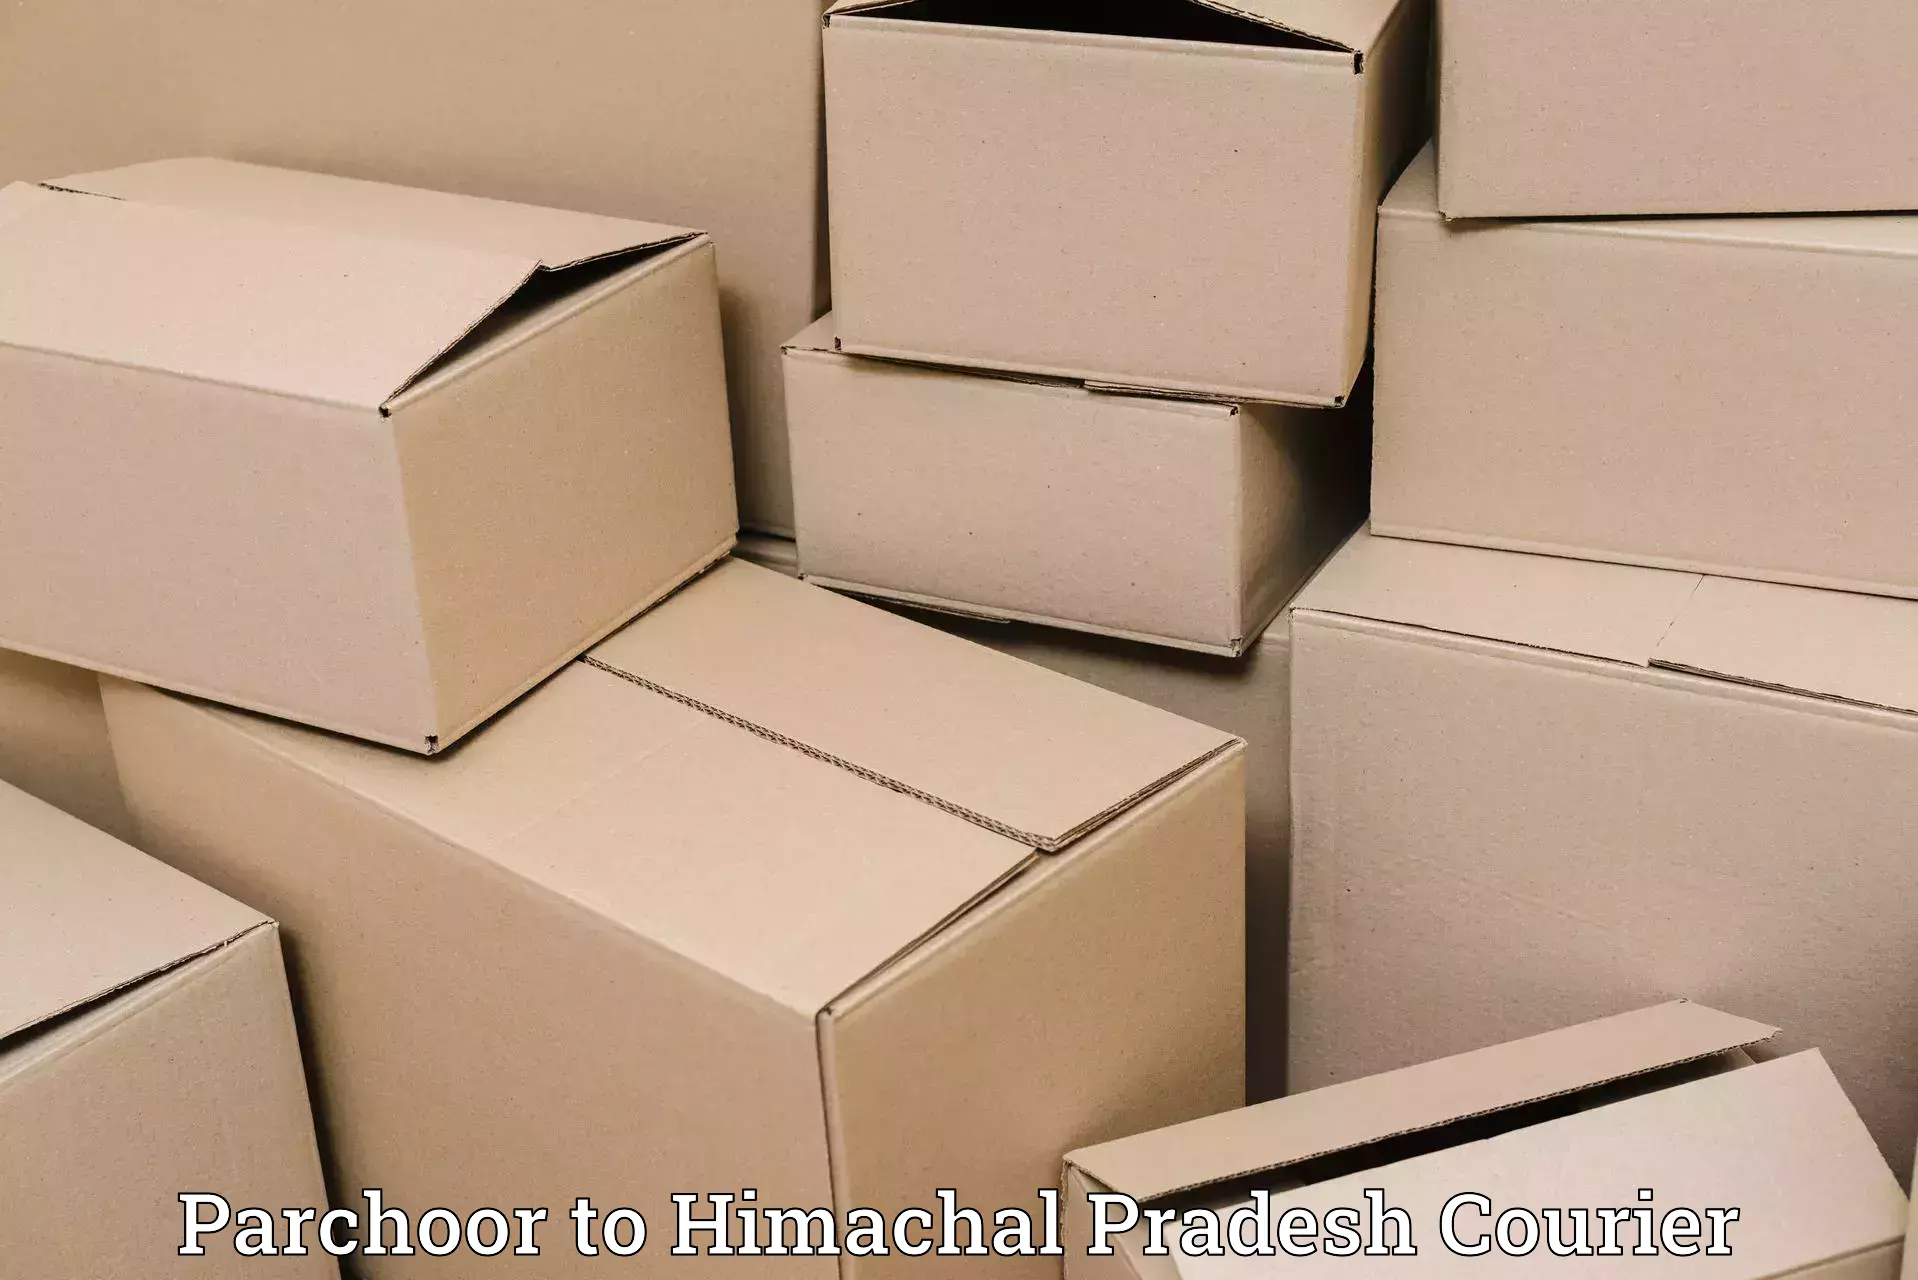 Advanced shipping network Parchoor to Bilaspur Himachal Pradesh